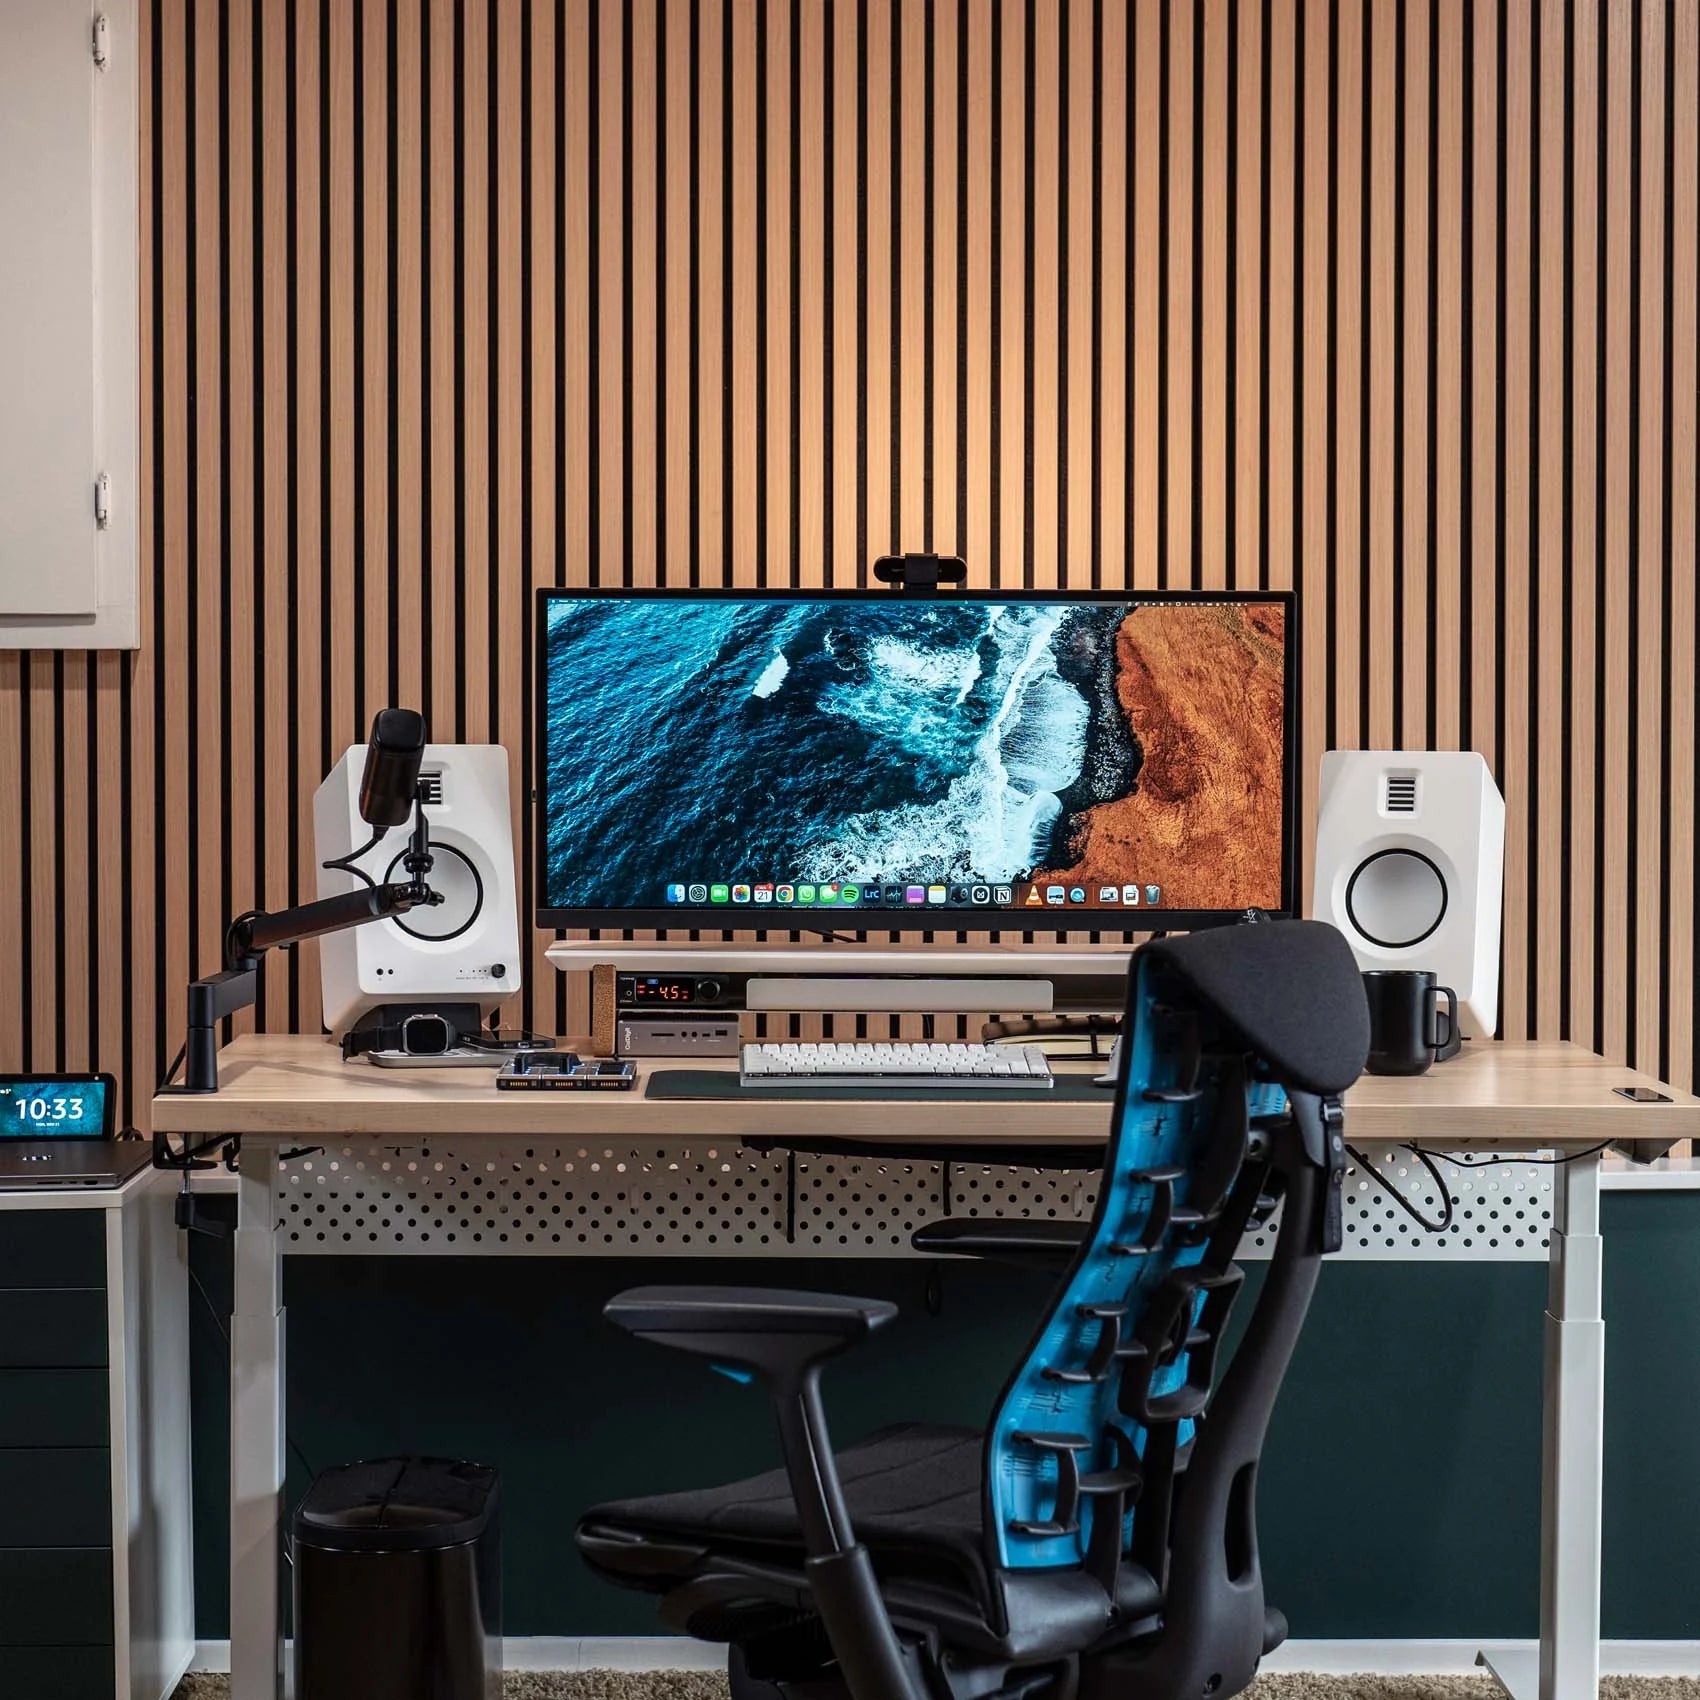 Custom Desks & Inspirations for Your Home Office